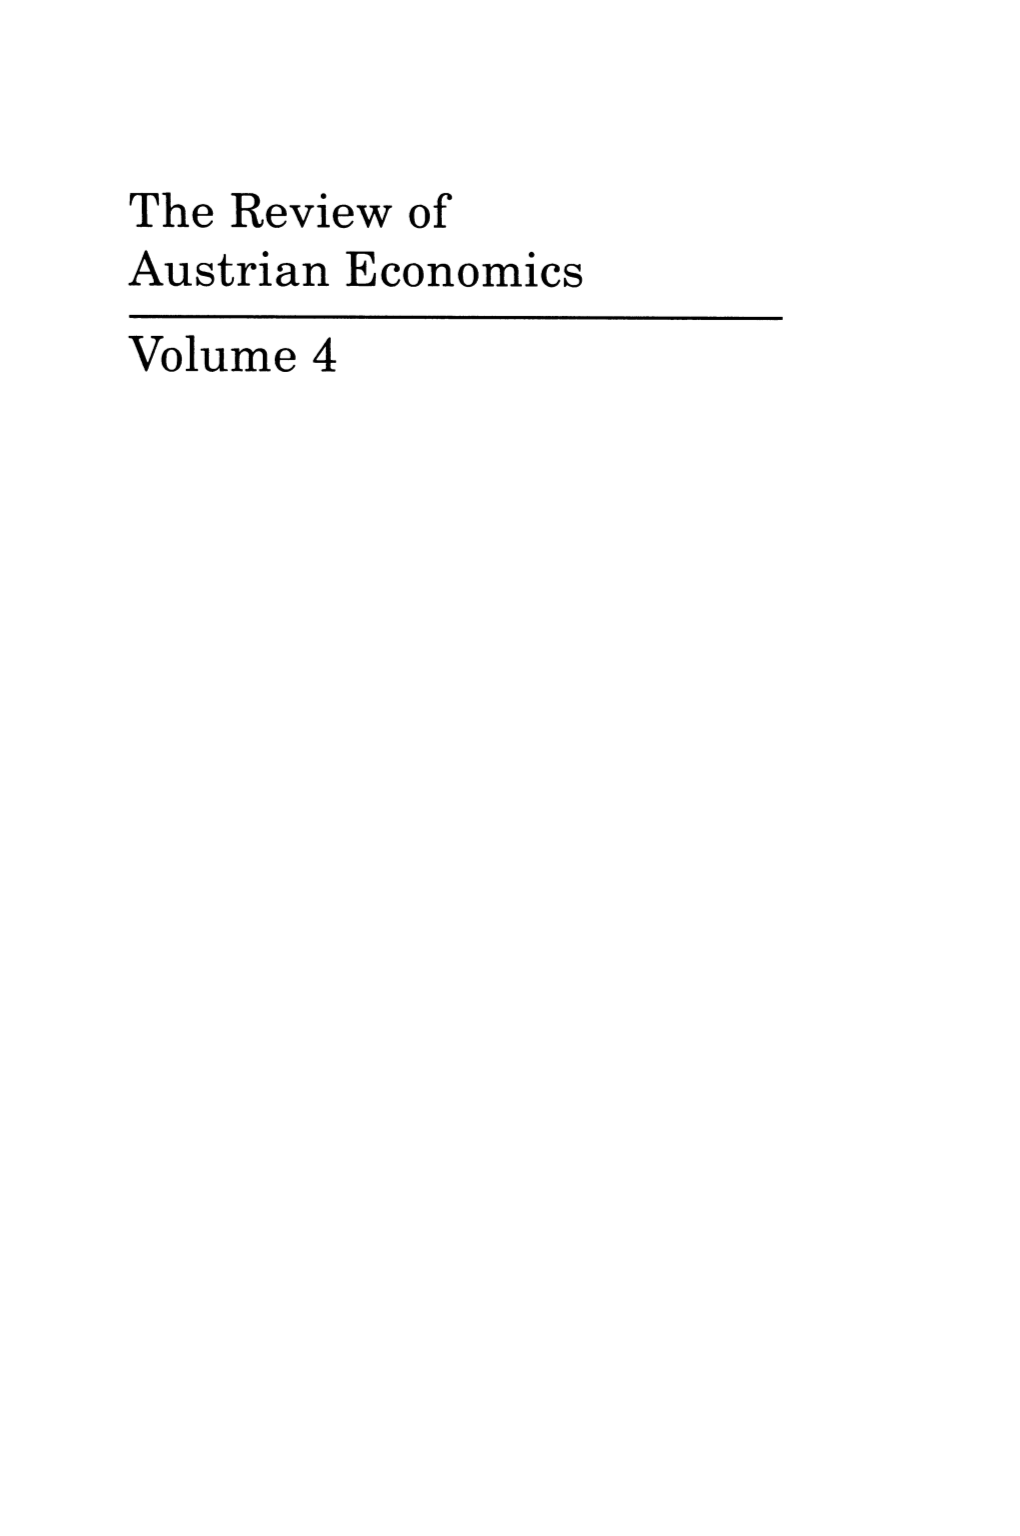 The Review of Austrian Economics Volume 4